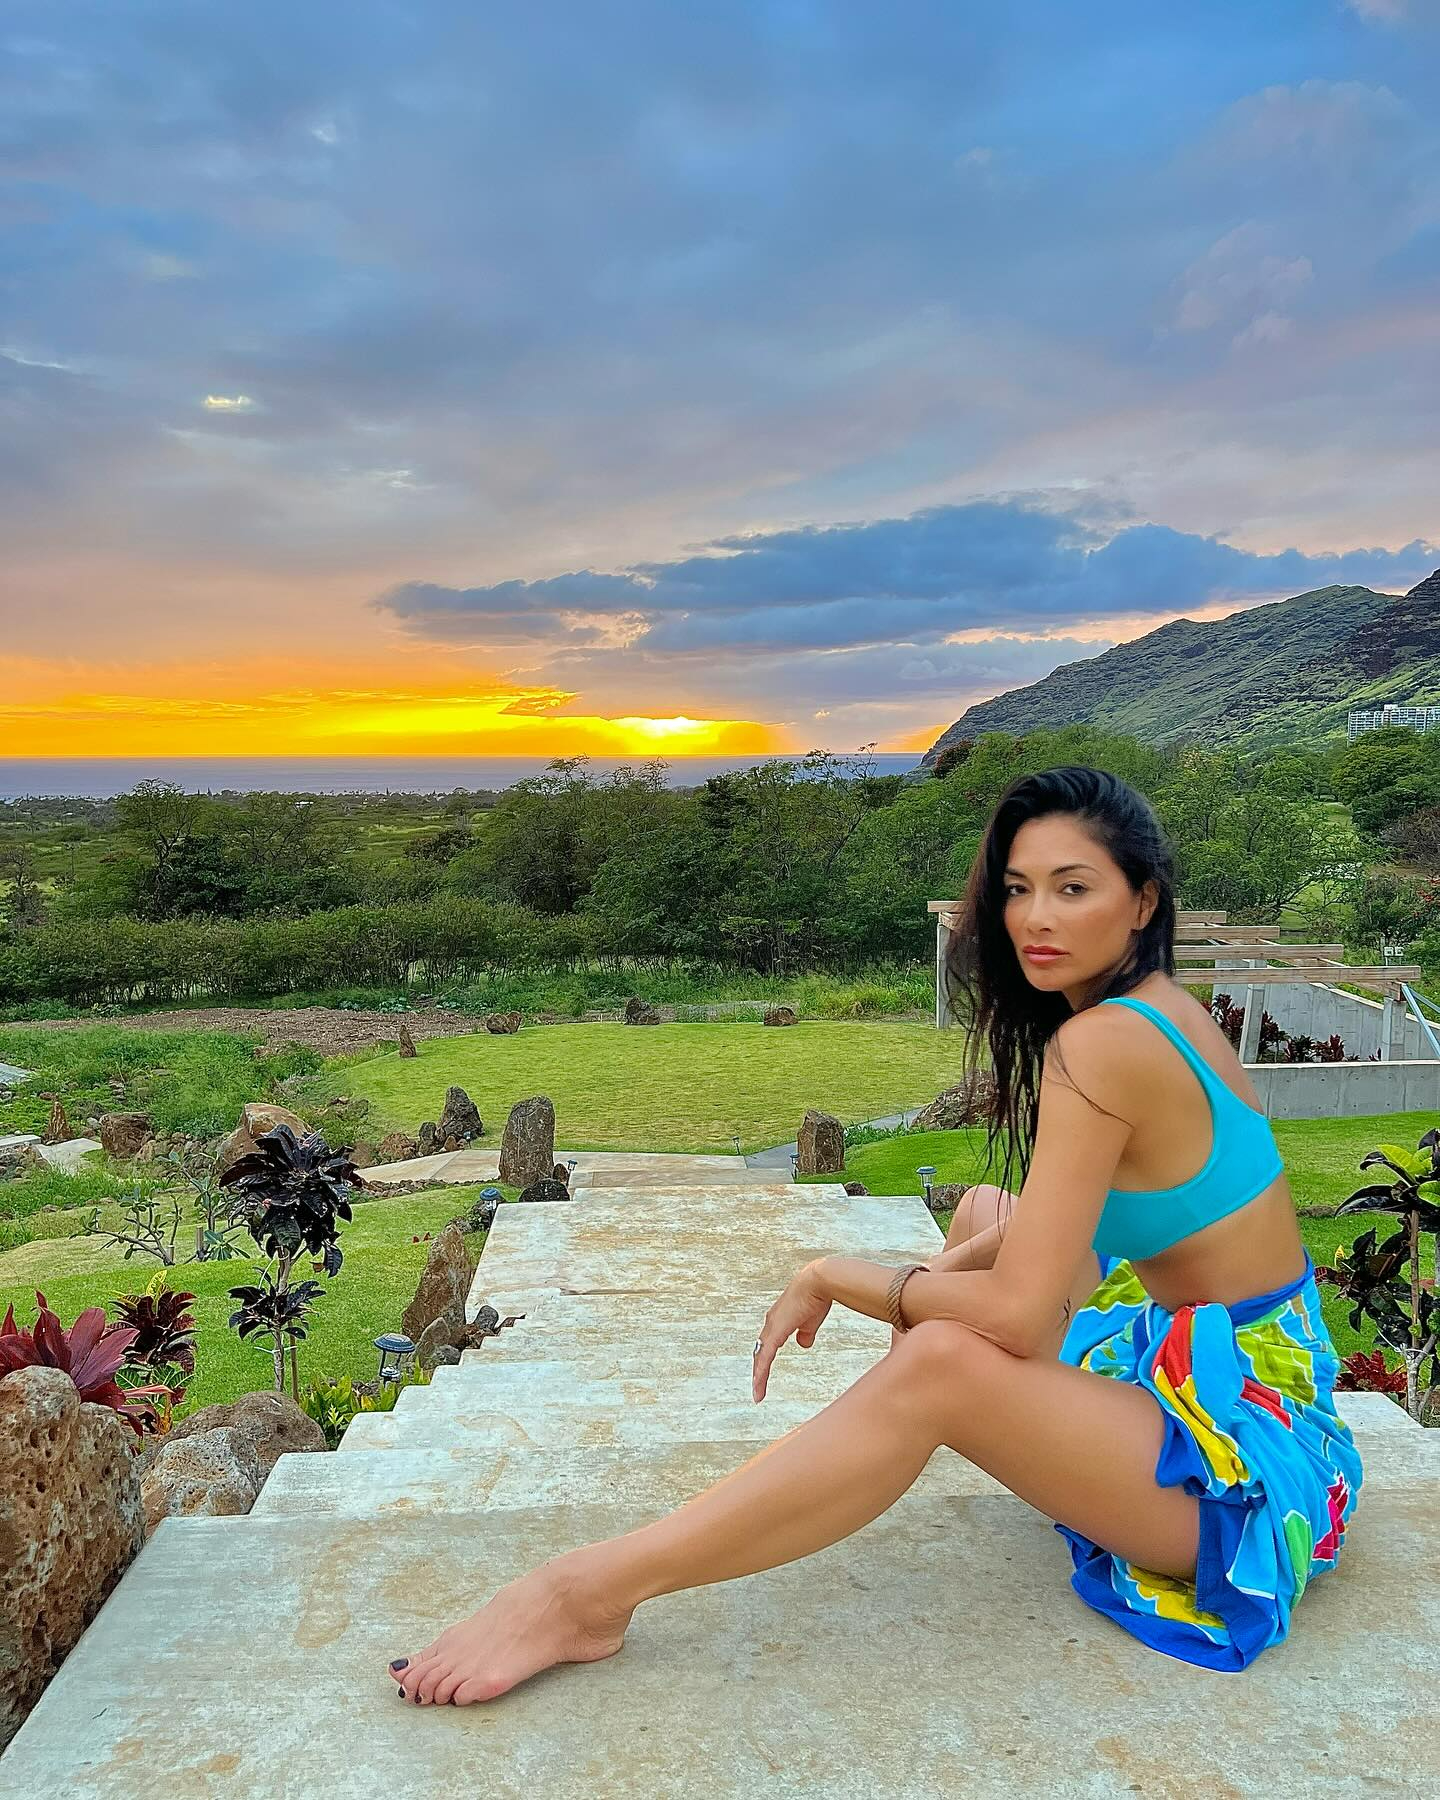 Globe-trotting Nicole Scherzinger took a trip to Hawaii this year